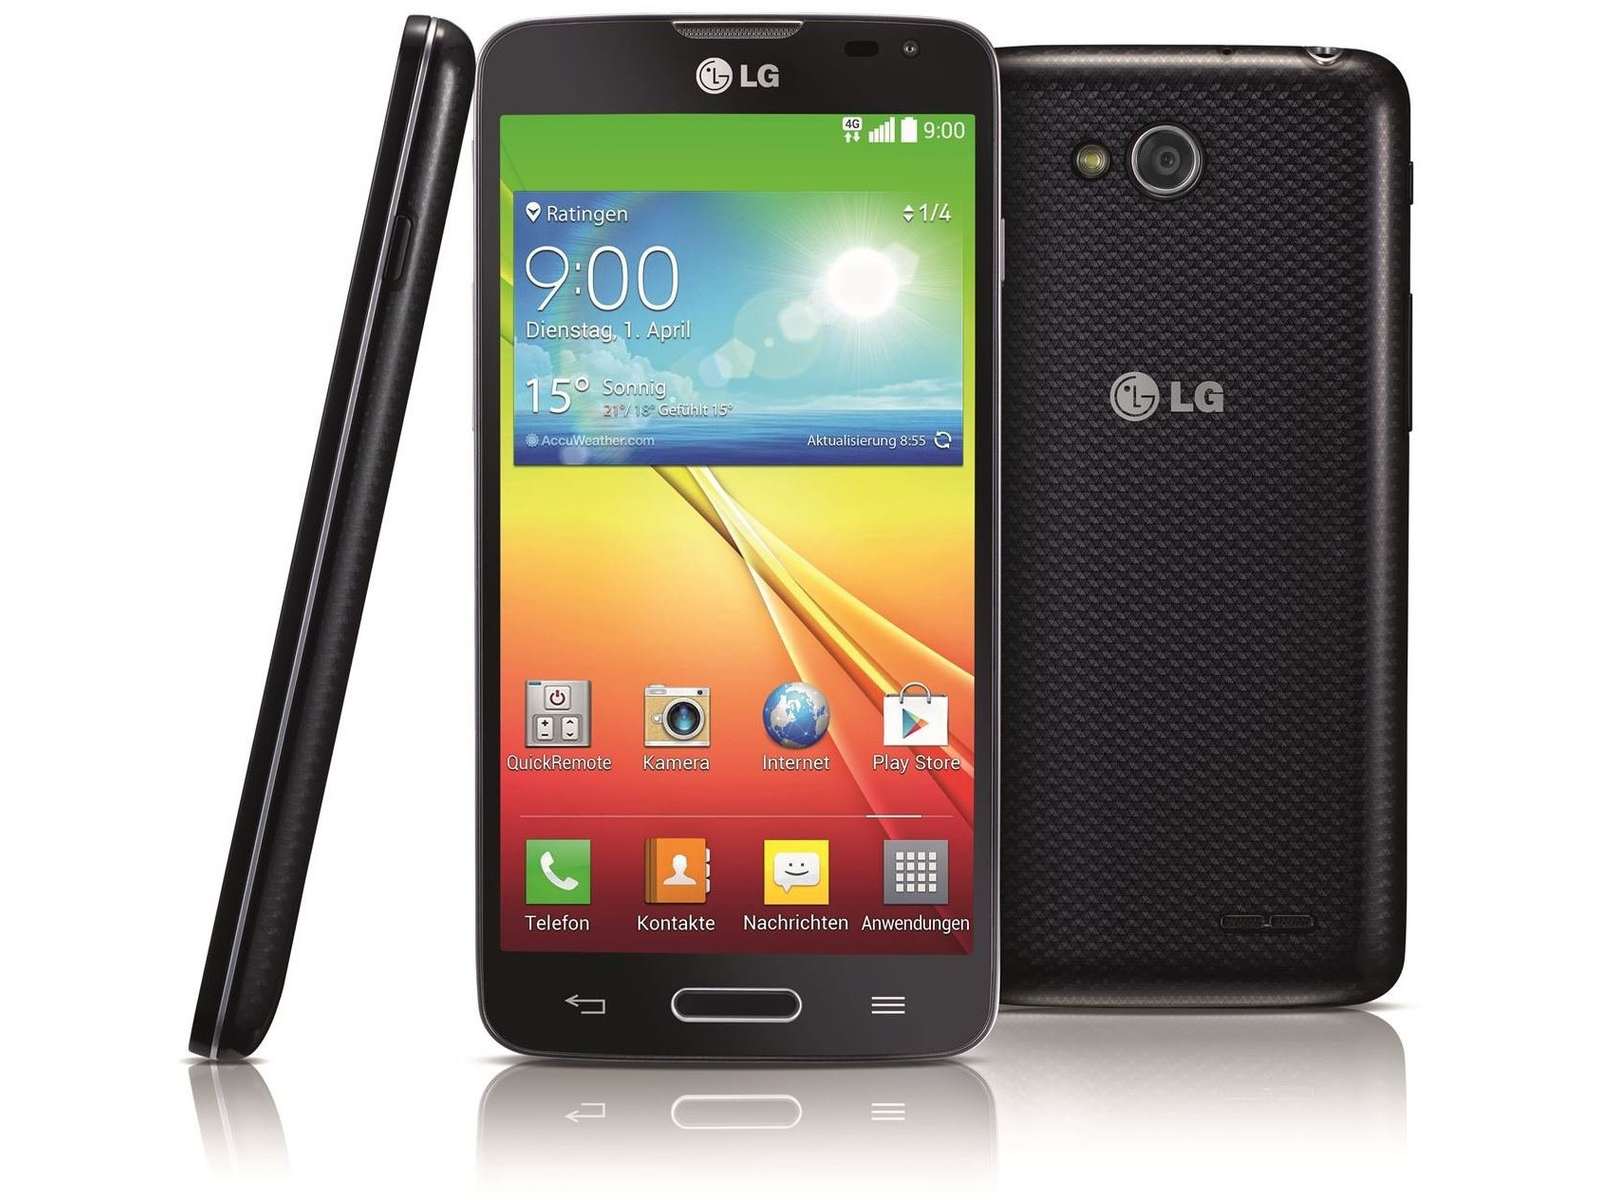 Breve análisis del Smartphone LG L90 - Notebookcheck.org